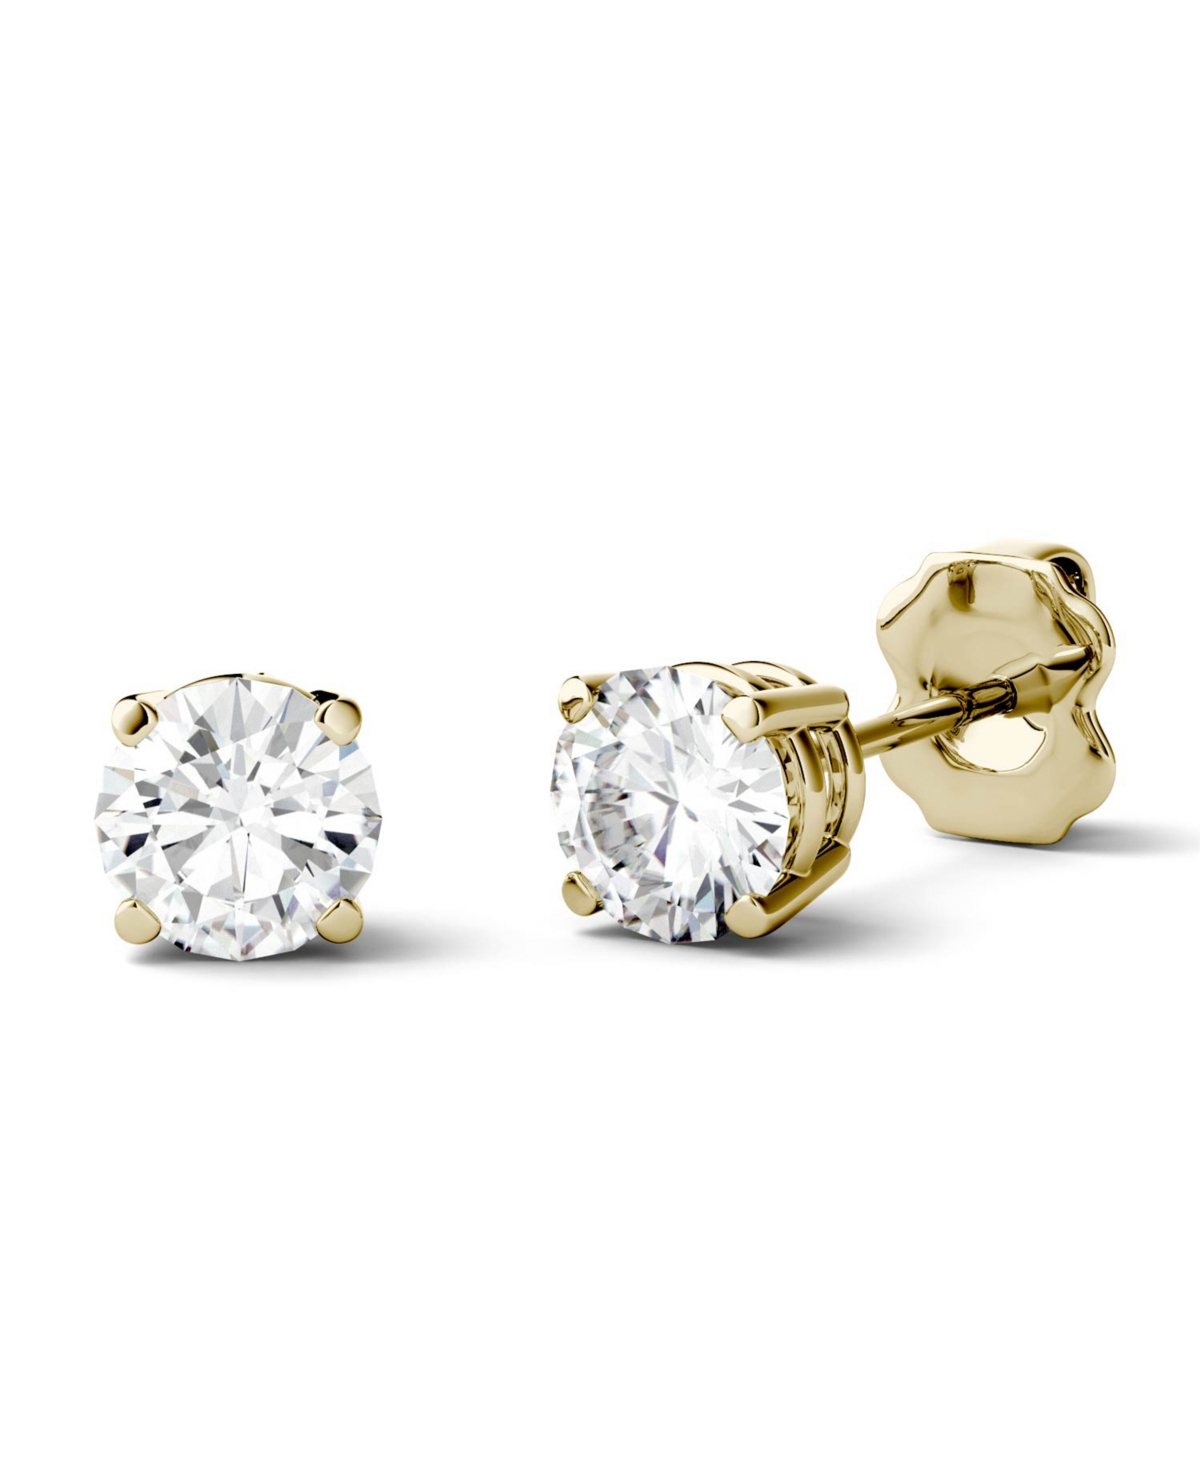 Charles & Colvard Moissanite Stud Earrings (1/2 ct. t.w. Diamond Equivalent) in 14k white or yellow gold